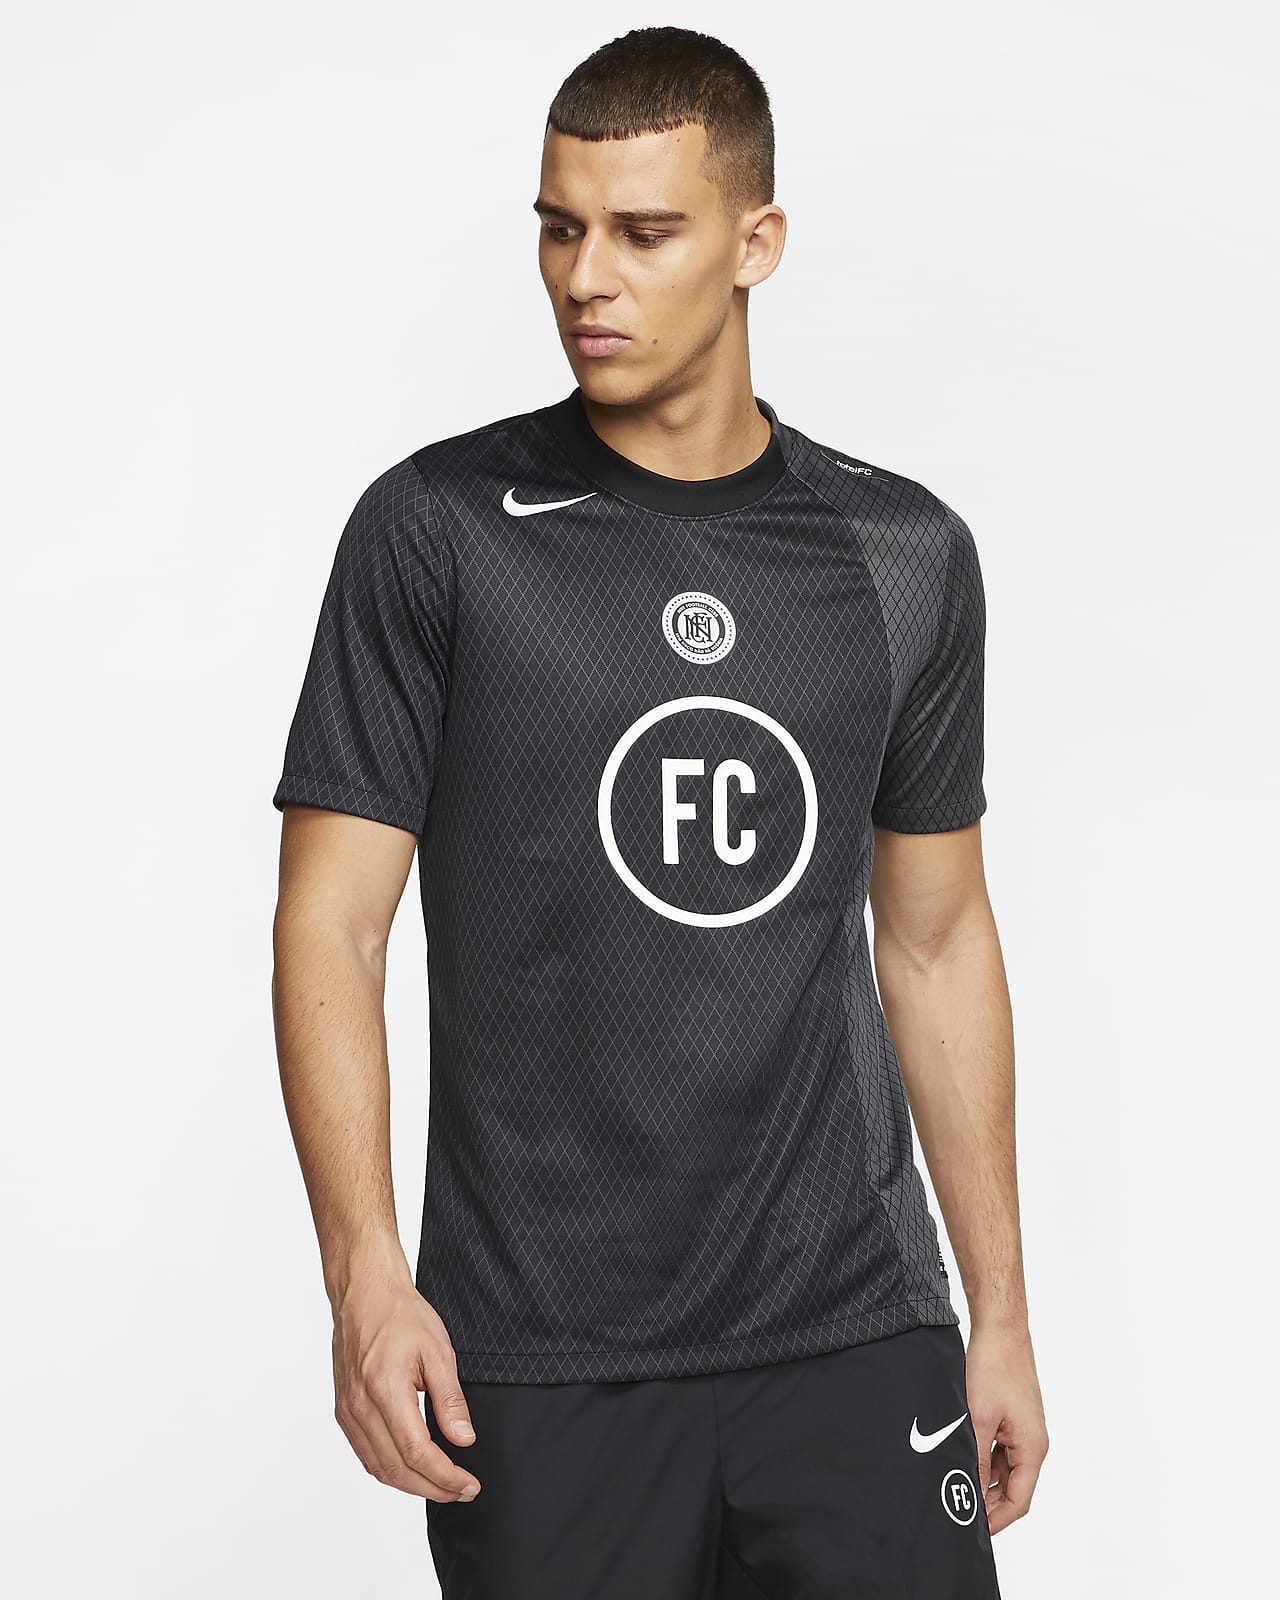 Nike F.C. Away Men's Football Shirt. Nike LU